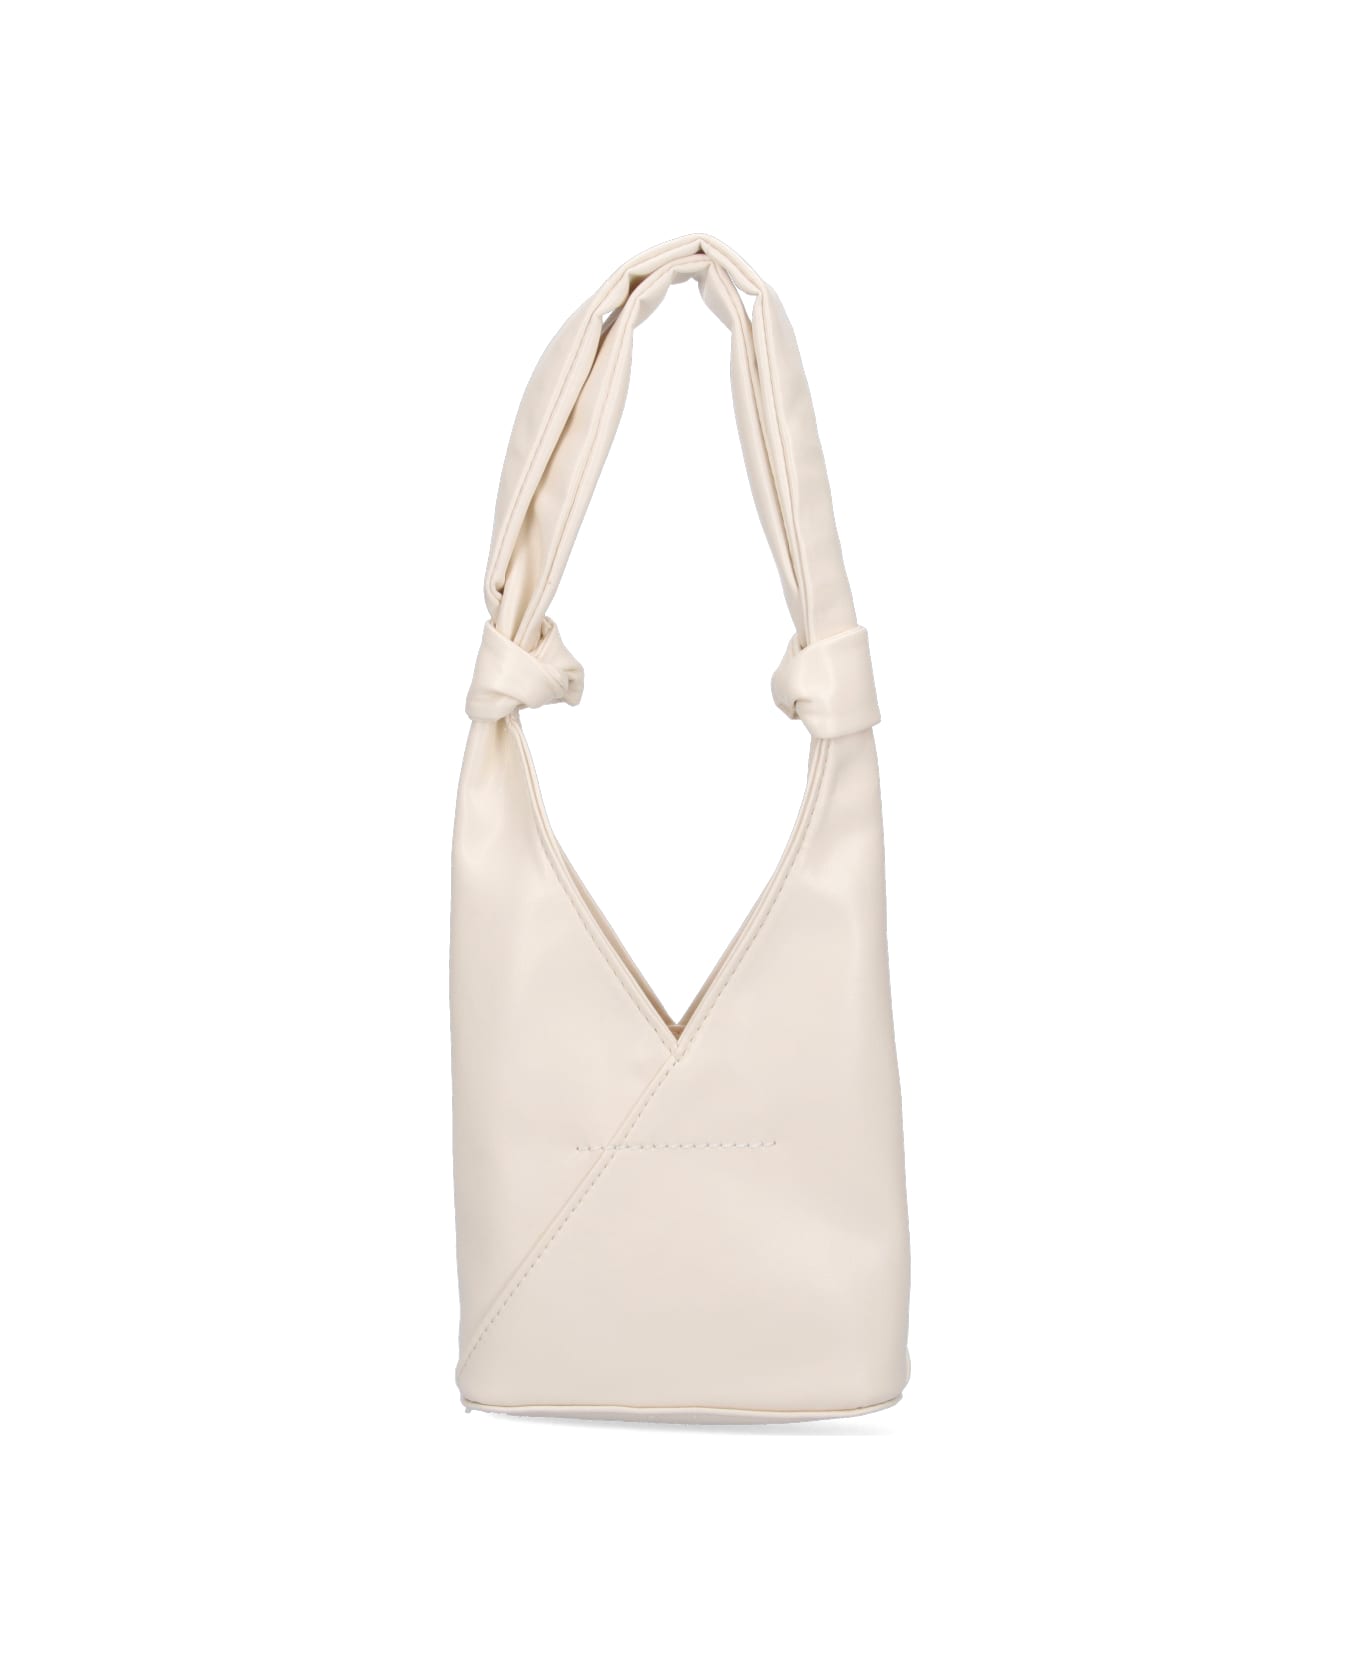 Maison Margiela Japanese Knotted Handbag - Cream トートバッグ